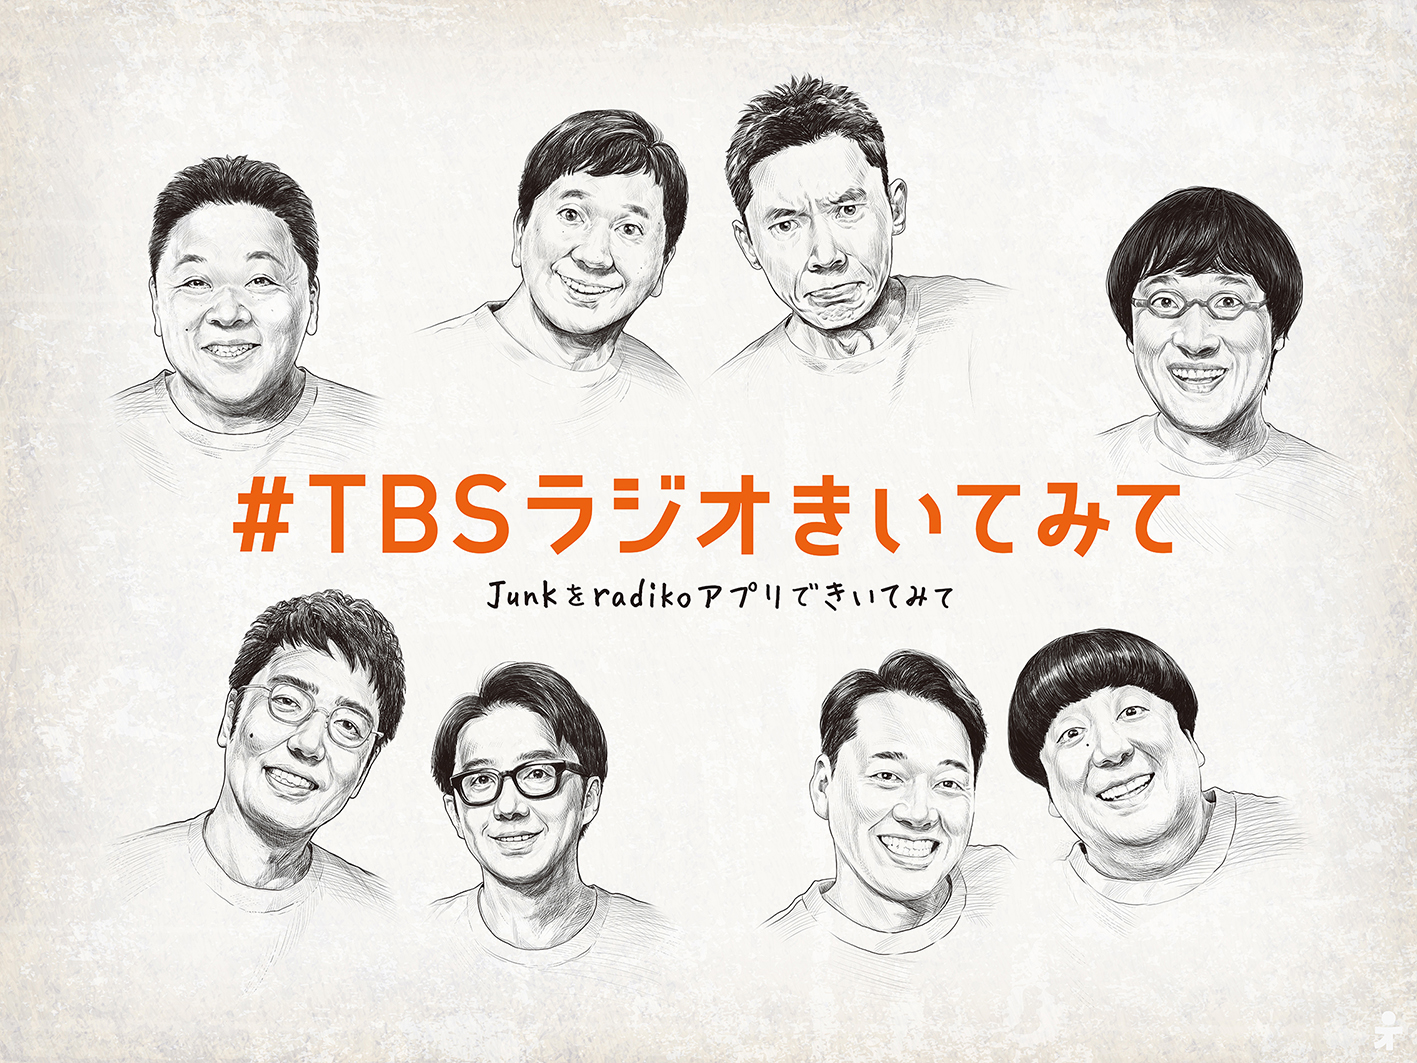 TBS RADIO / ＃TBSラジオきいてみて　広告キャンペーン1